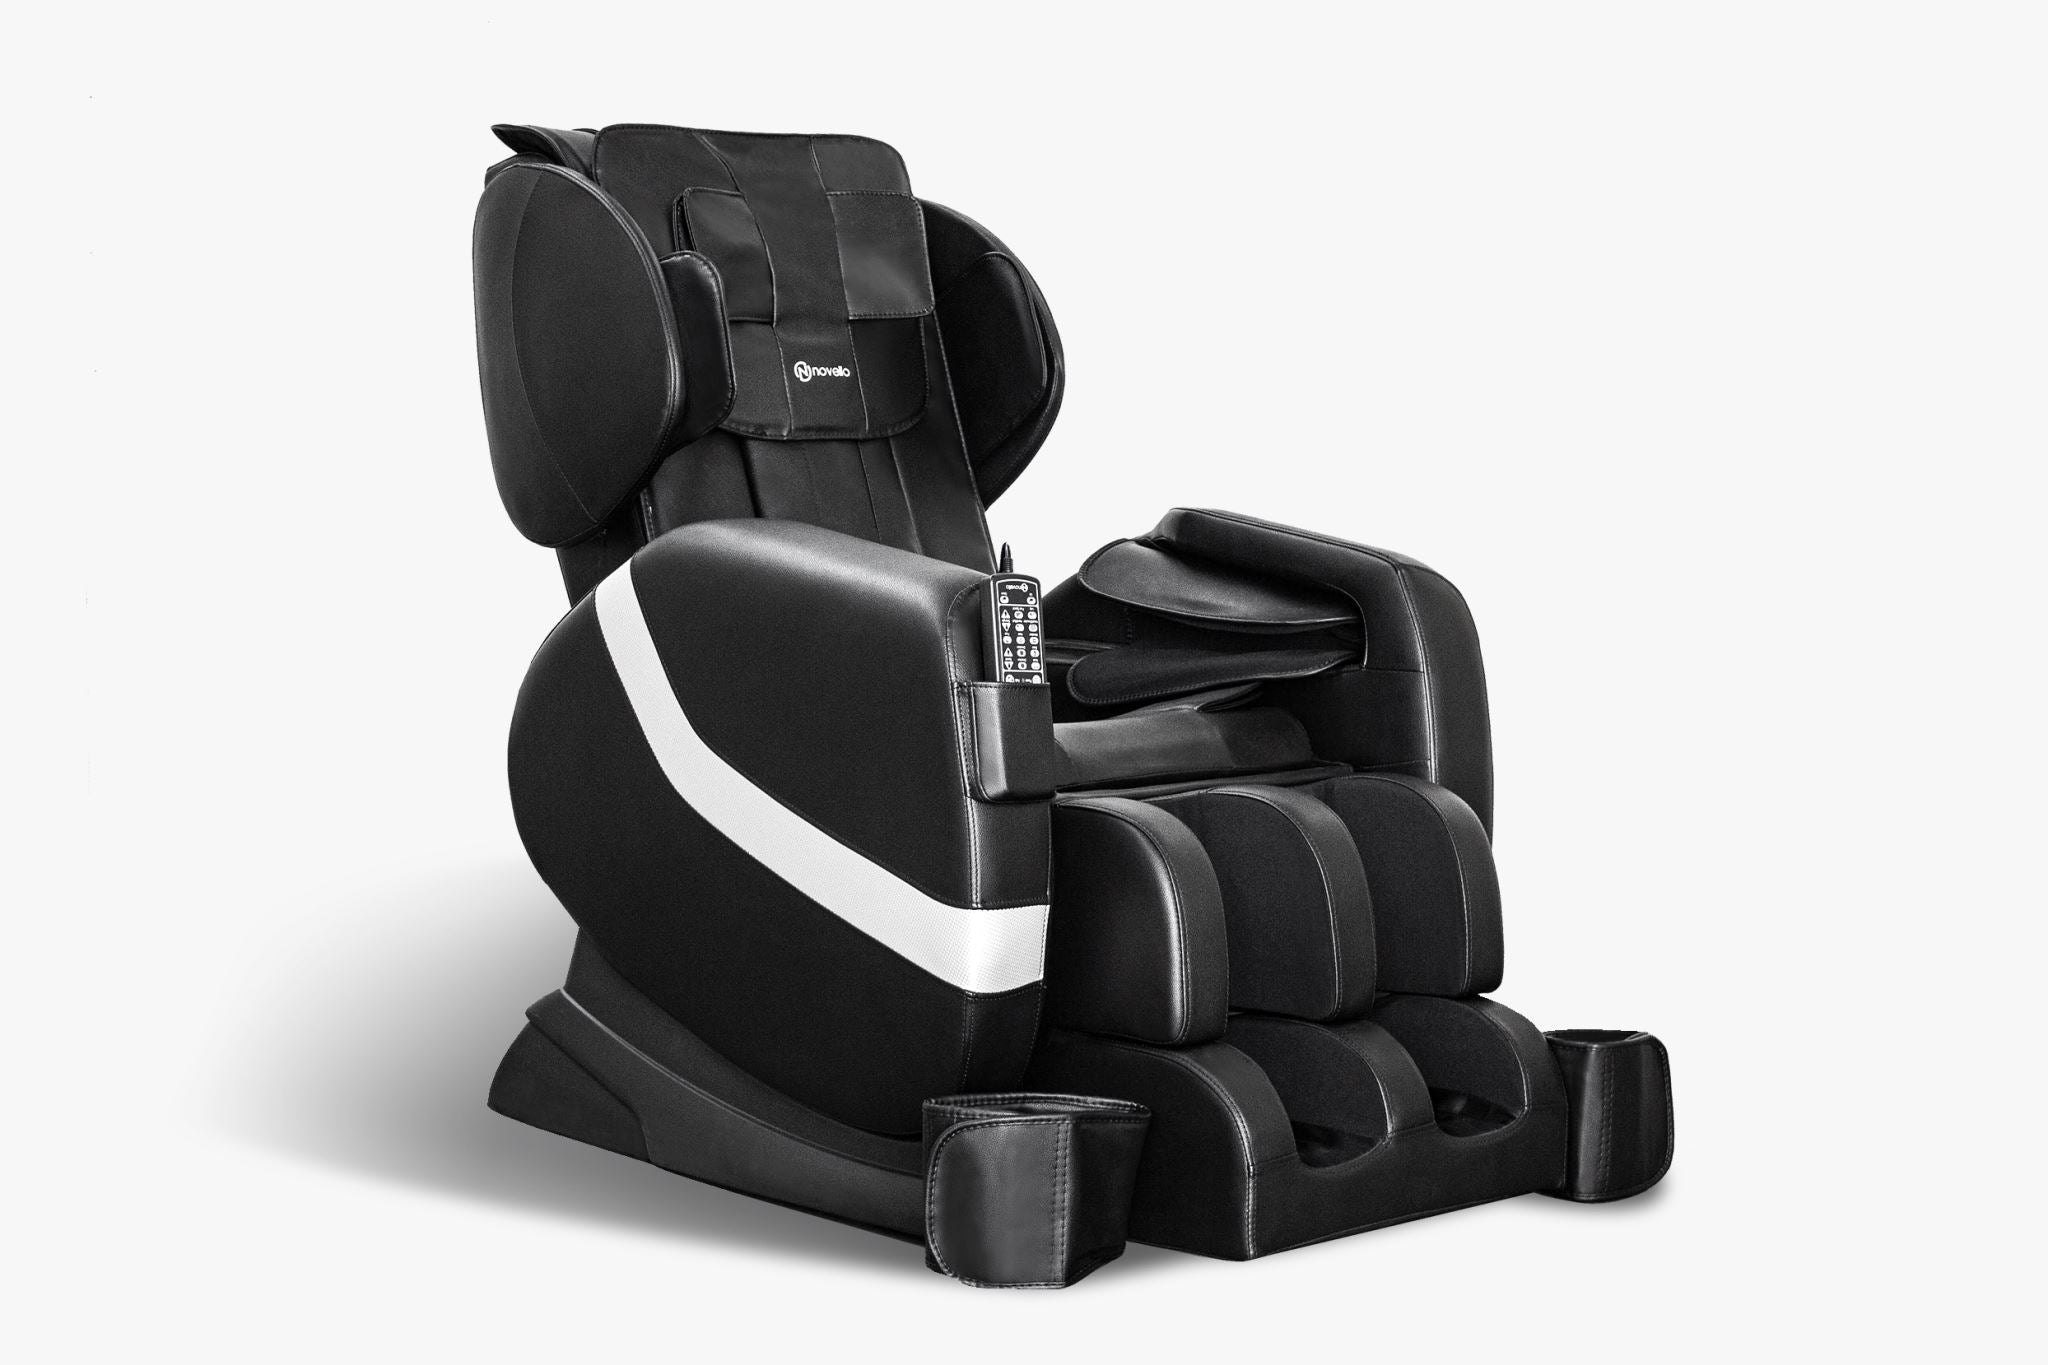 Full Body massage Chair